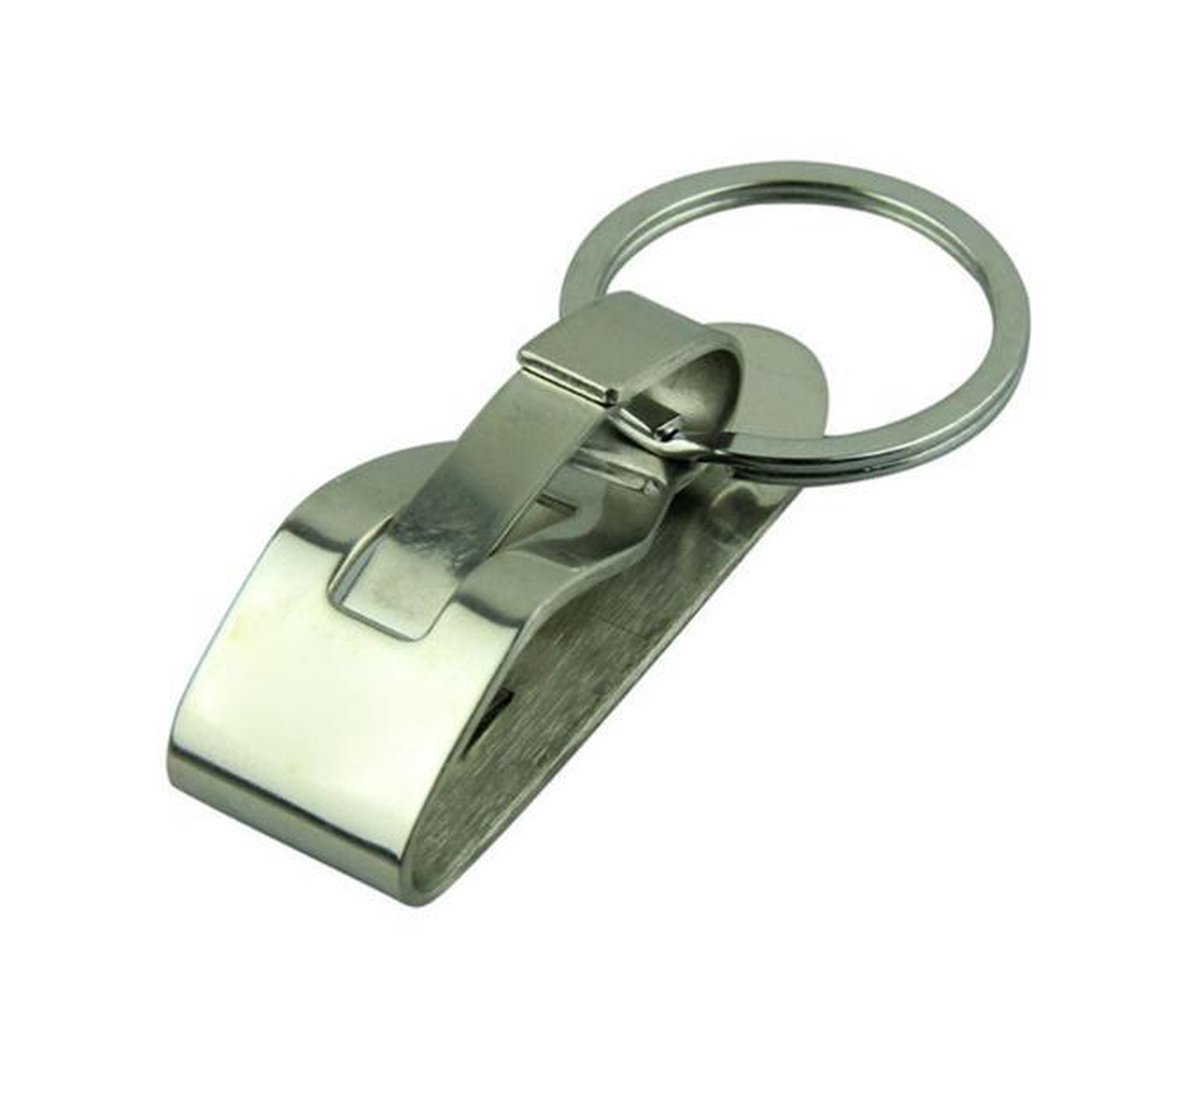 Boost Duwen Polair Riemclip sleutelhanger - Clip voor aan de riem - Security gesp - Metalen  sleutelhouder... | bol.com